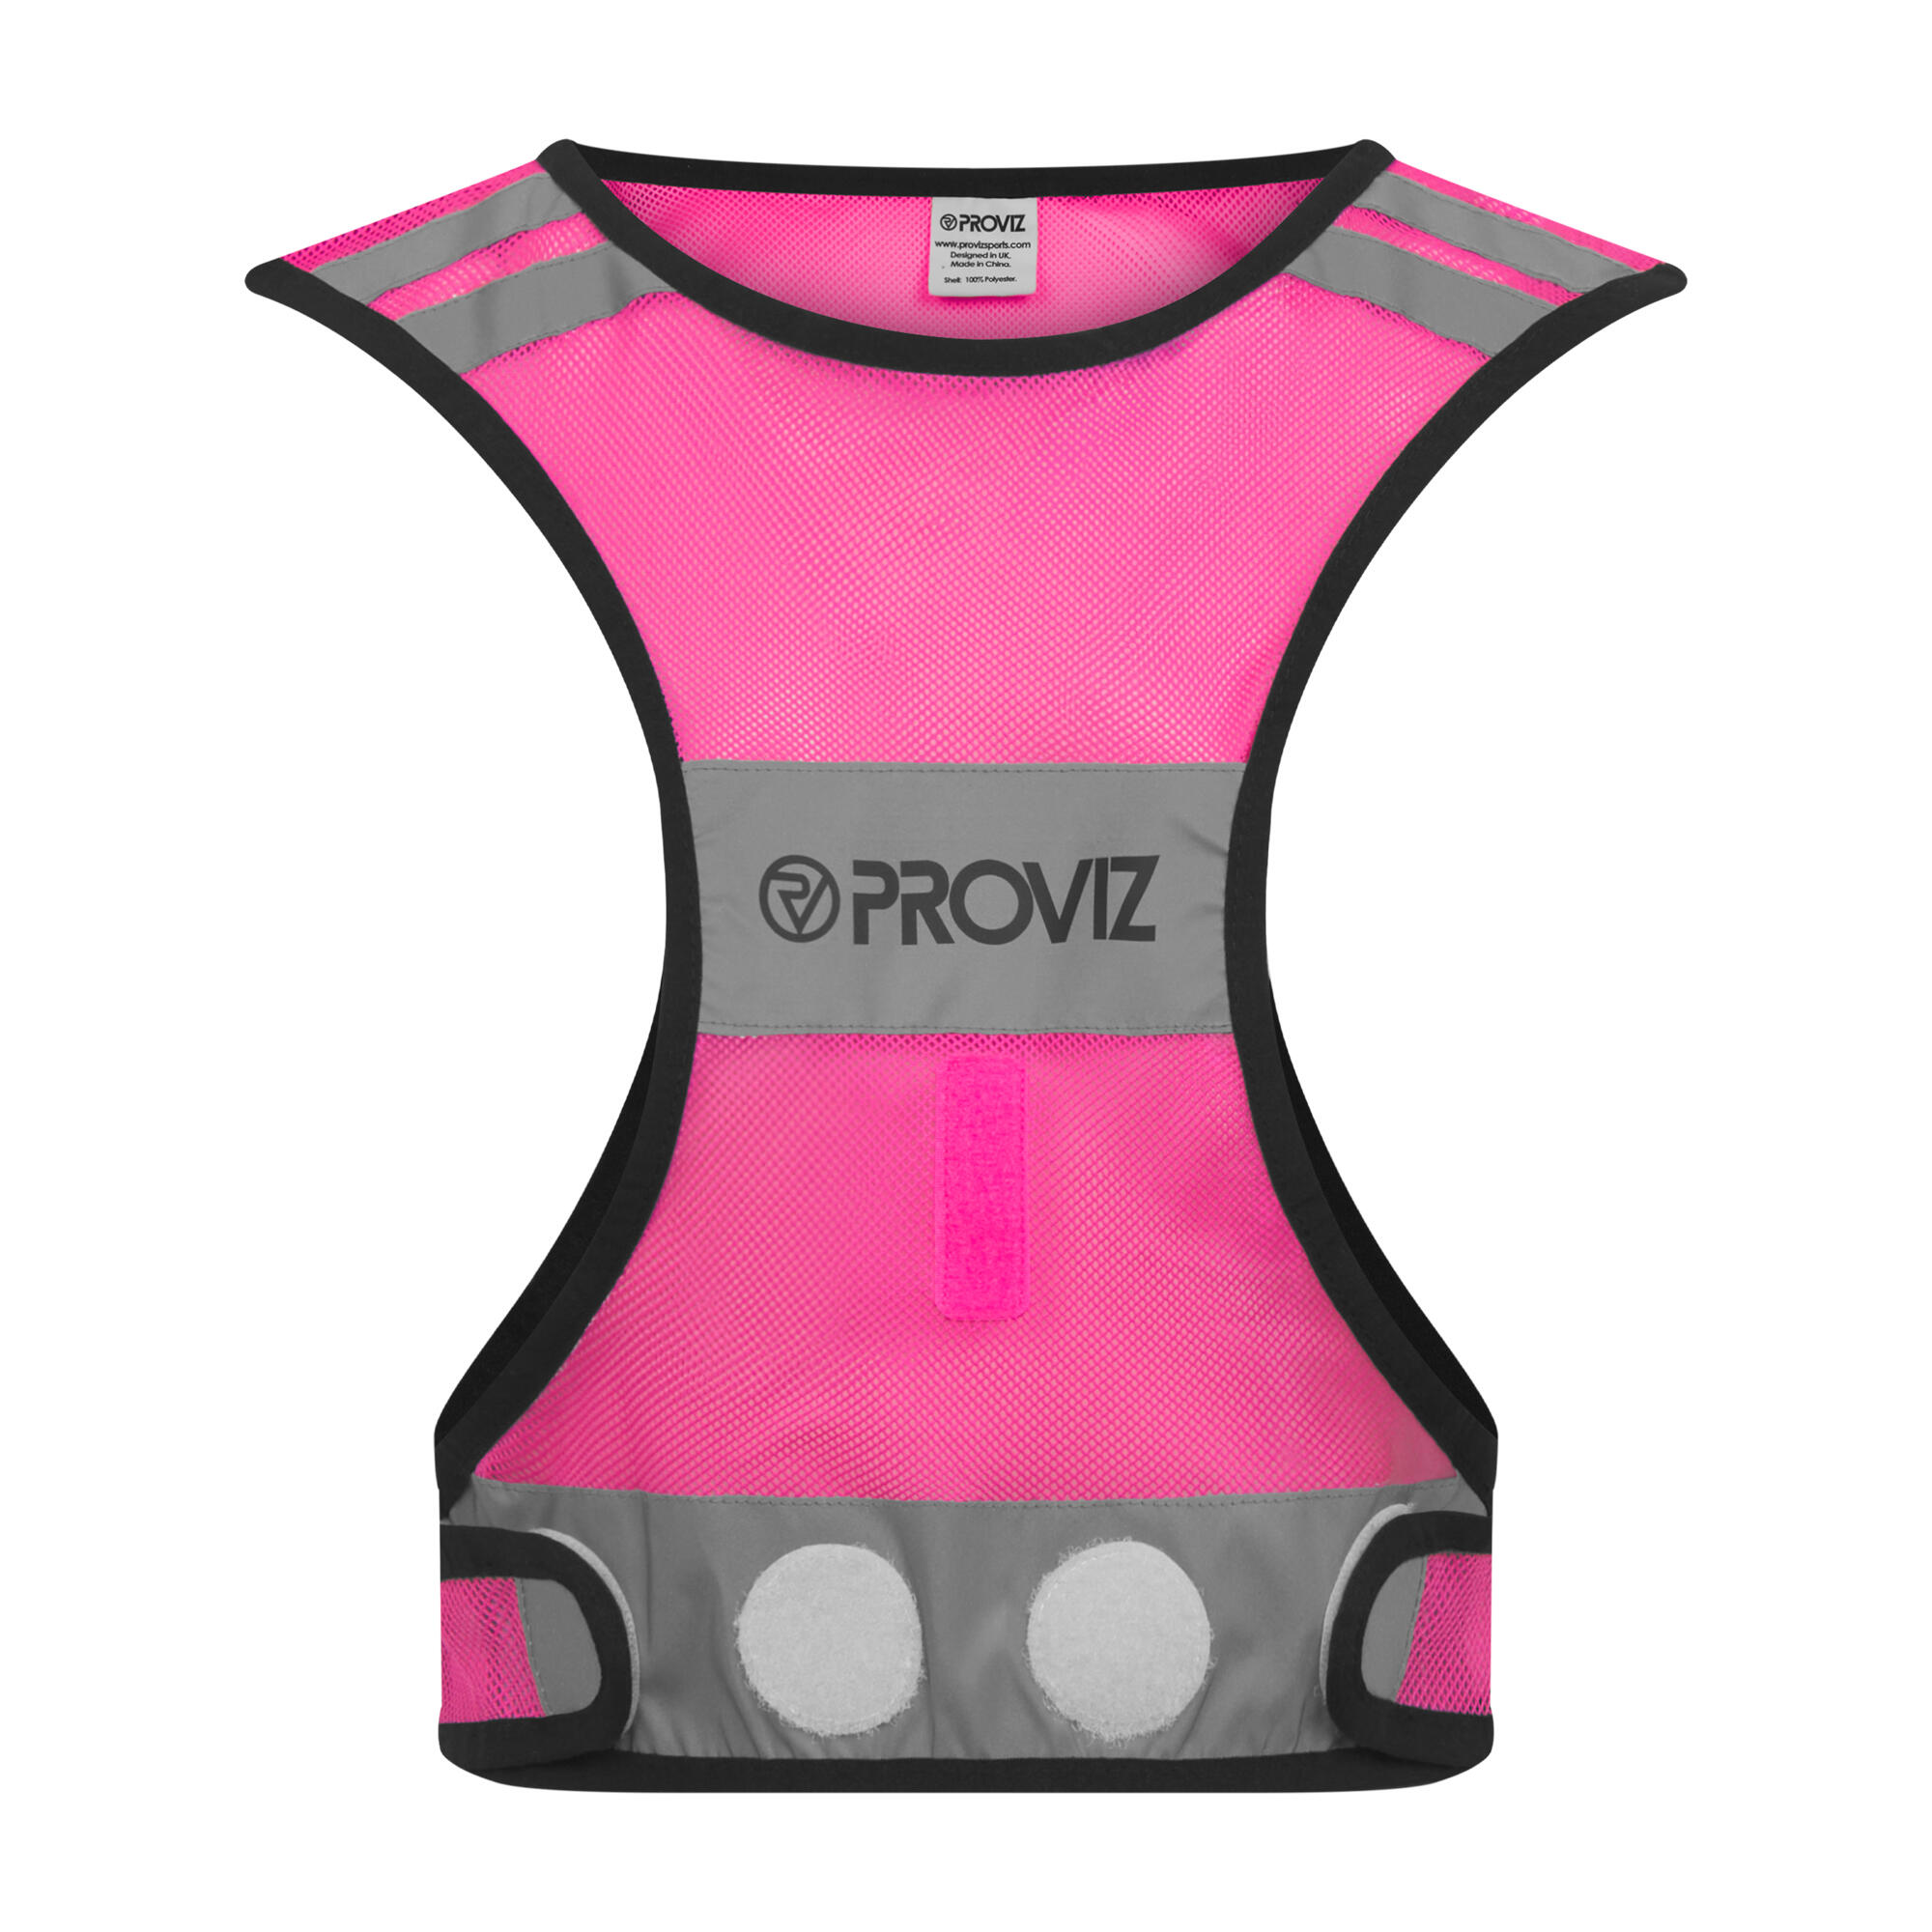 PROVIZ Proviz Classic Breathable Reflective Unisex Running Vest